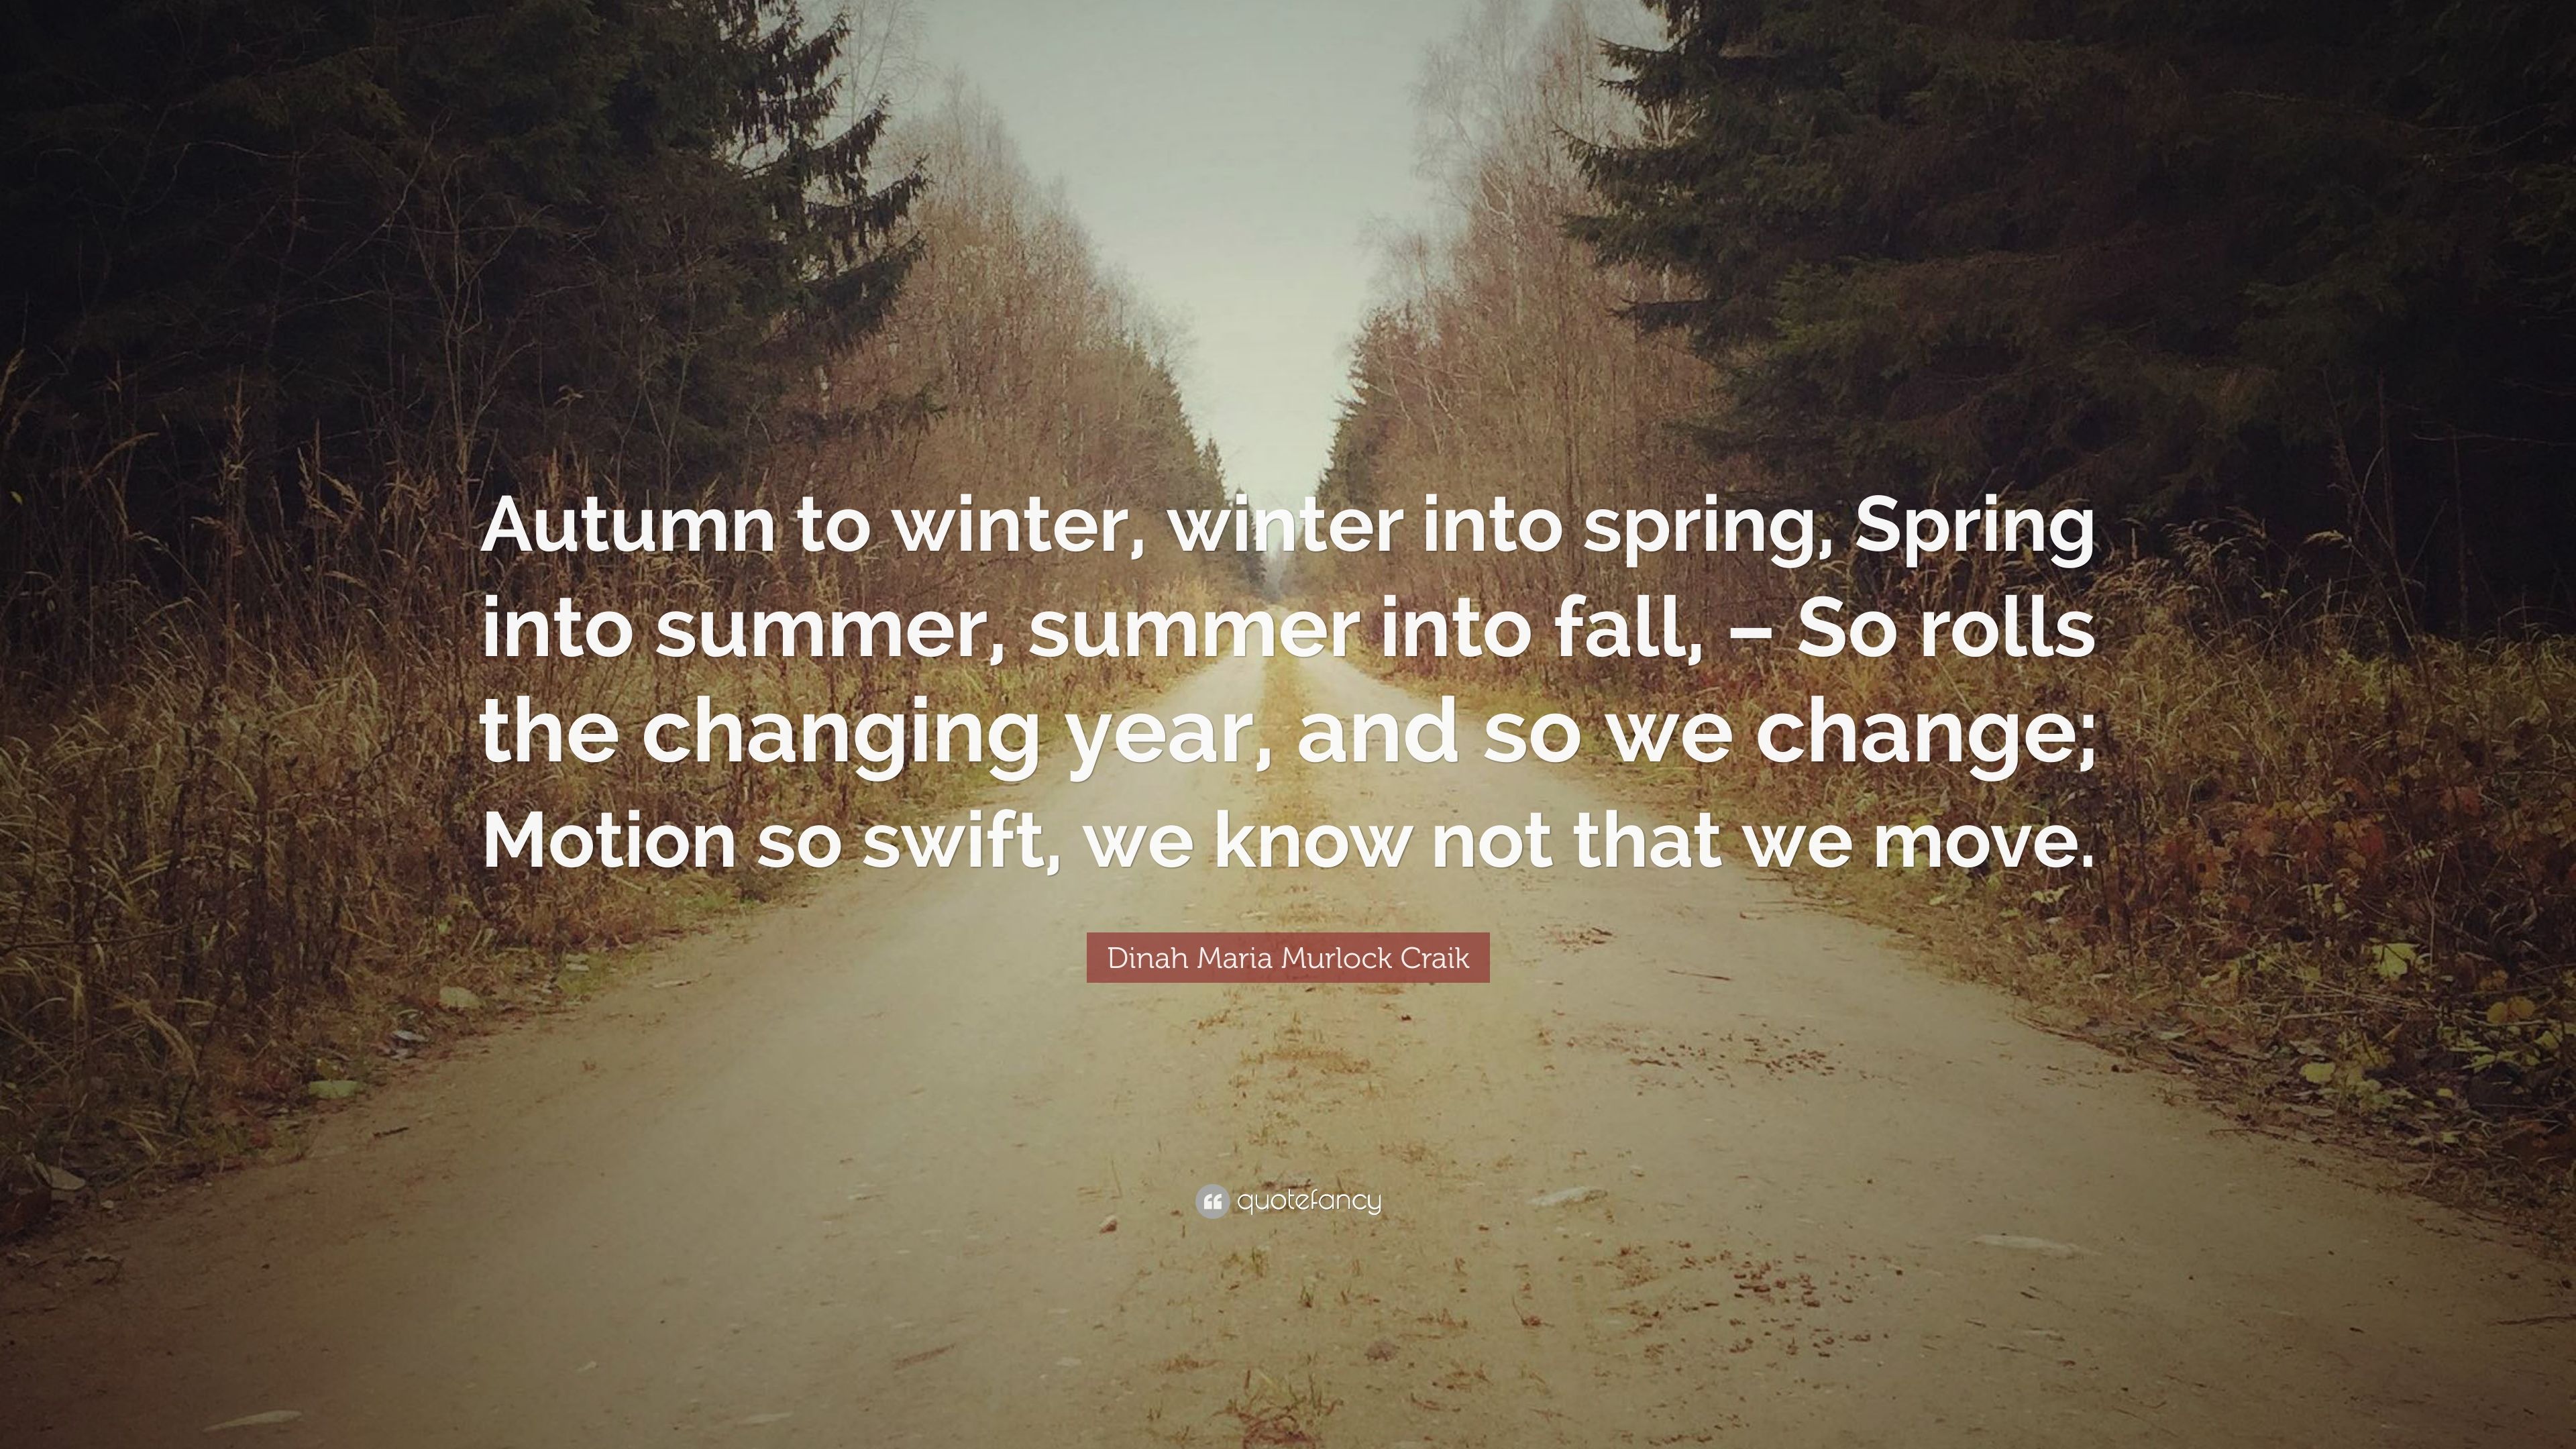 Dinah Maria Murlock Craik Quote: “Autumn to winter, winter into